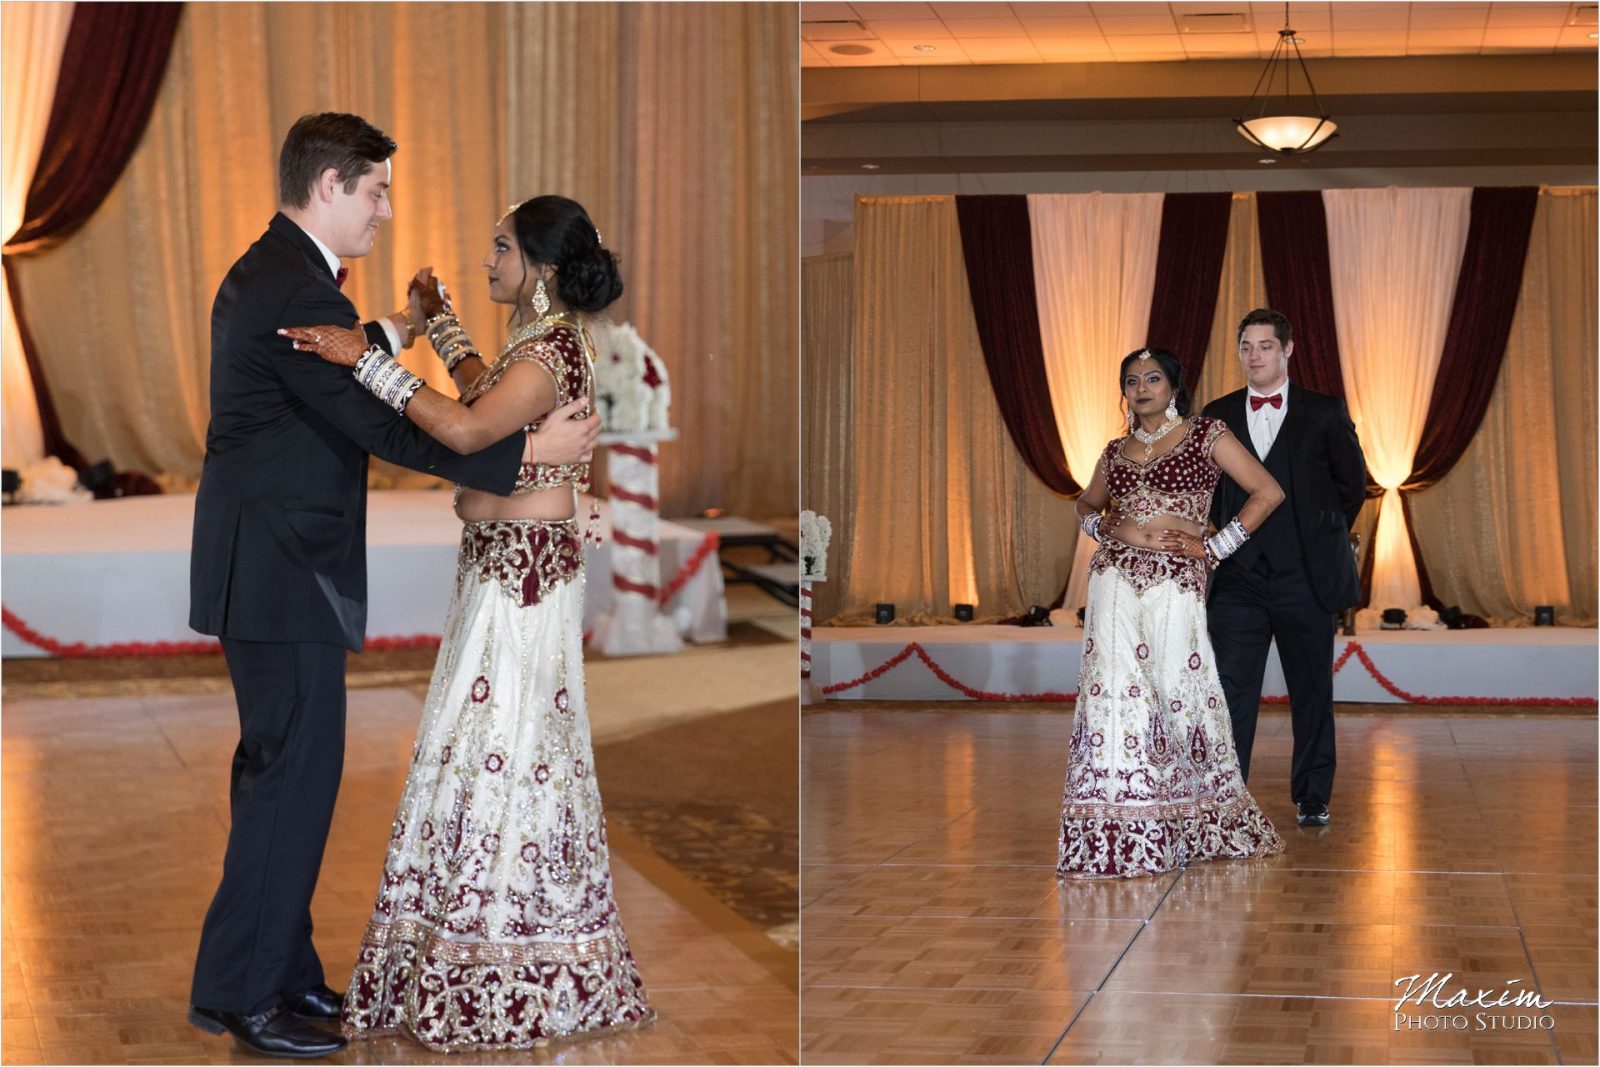 Savannah Center Cincinnati Indian Wedding Reception dance